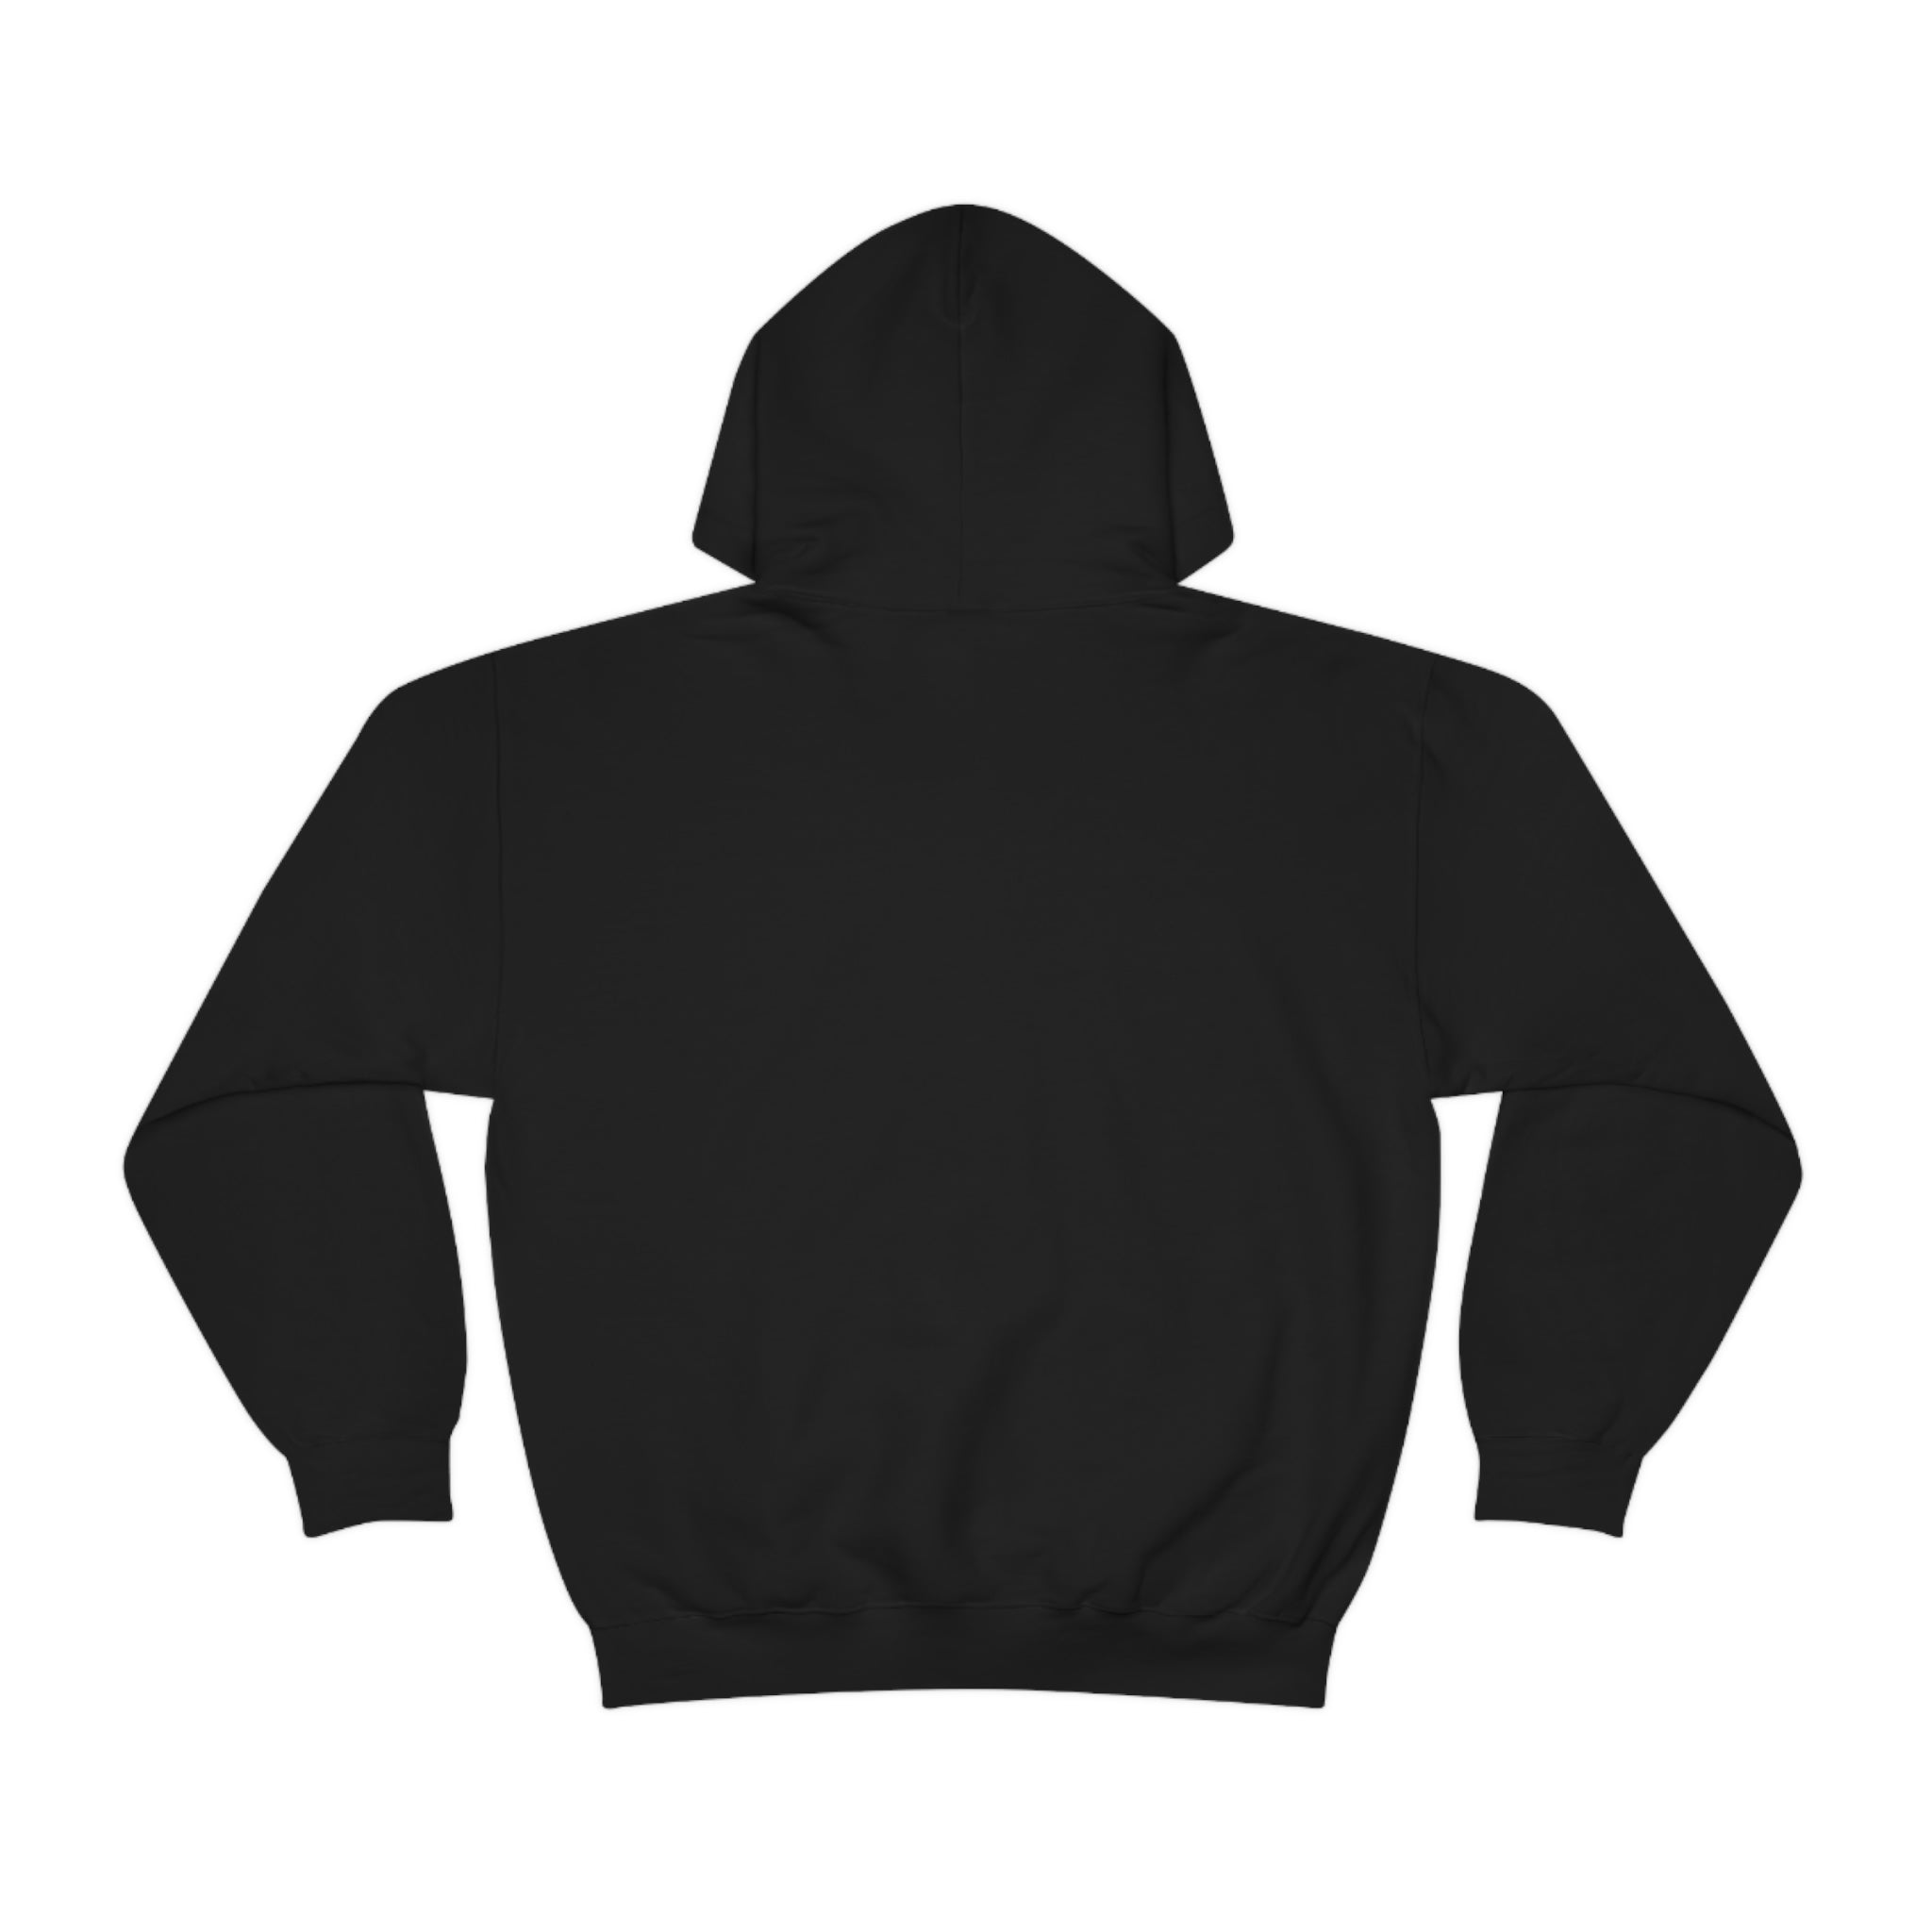 Chernobyl Generation - Hooded Sweatshirt